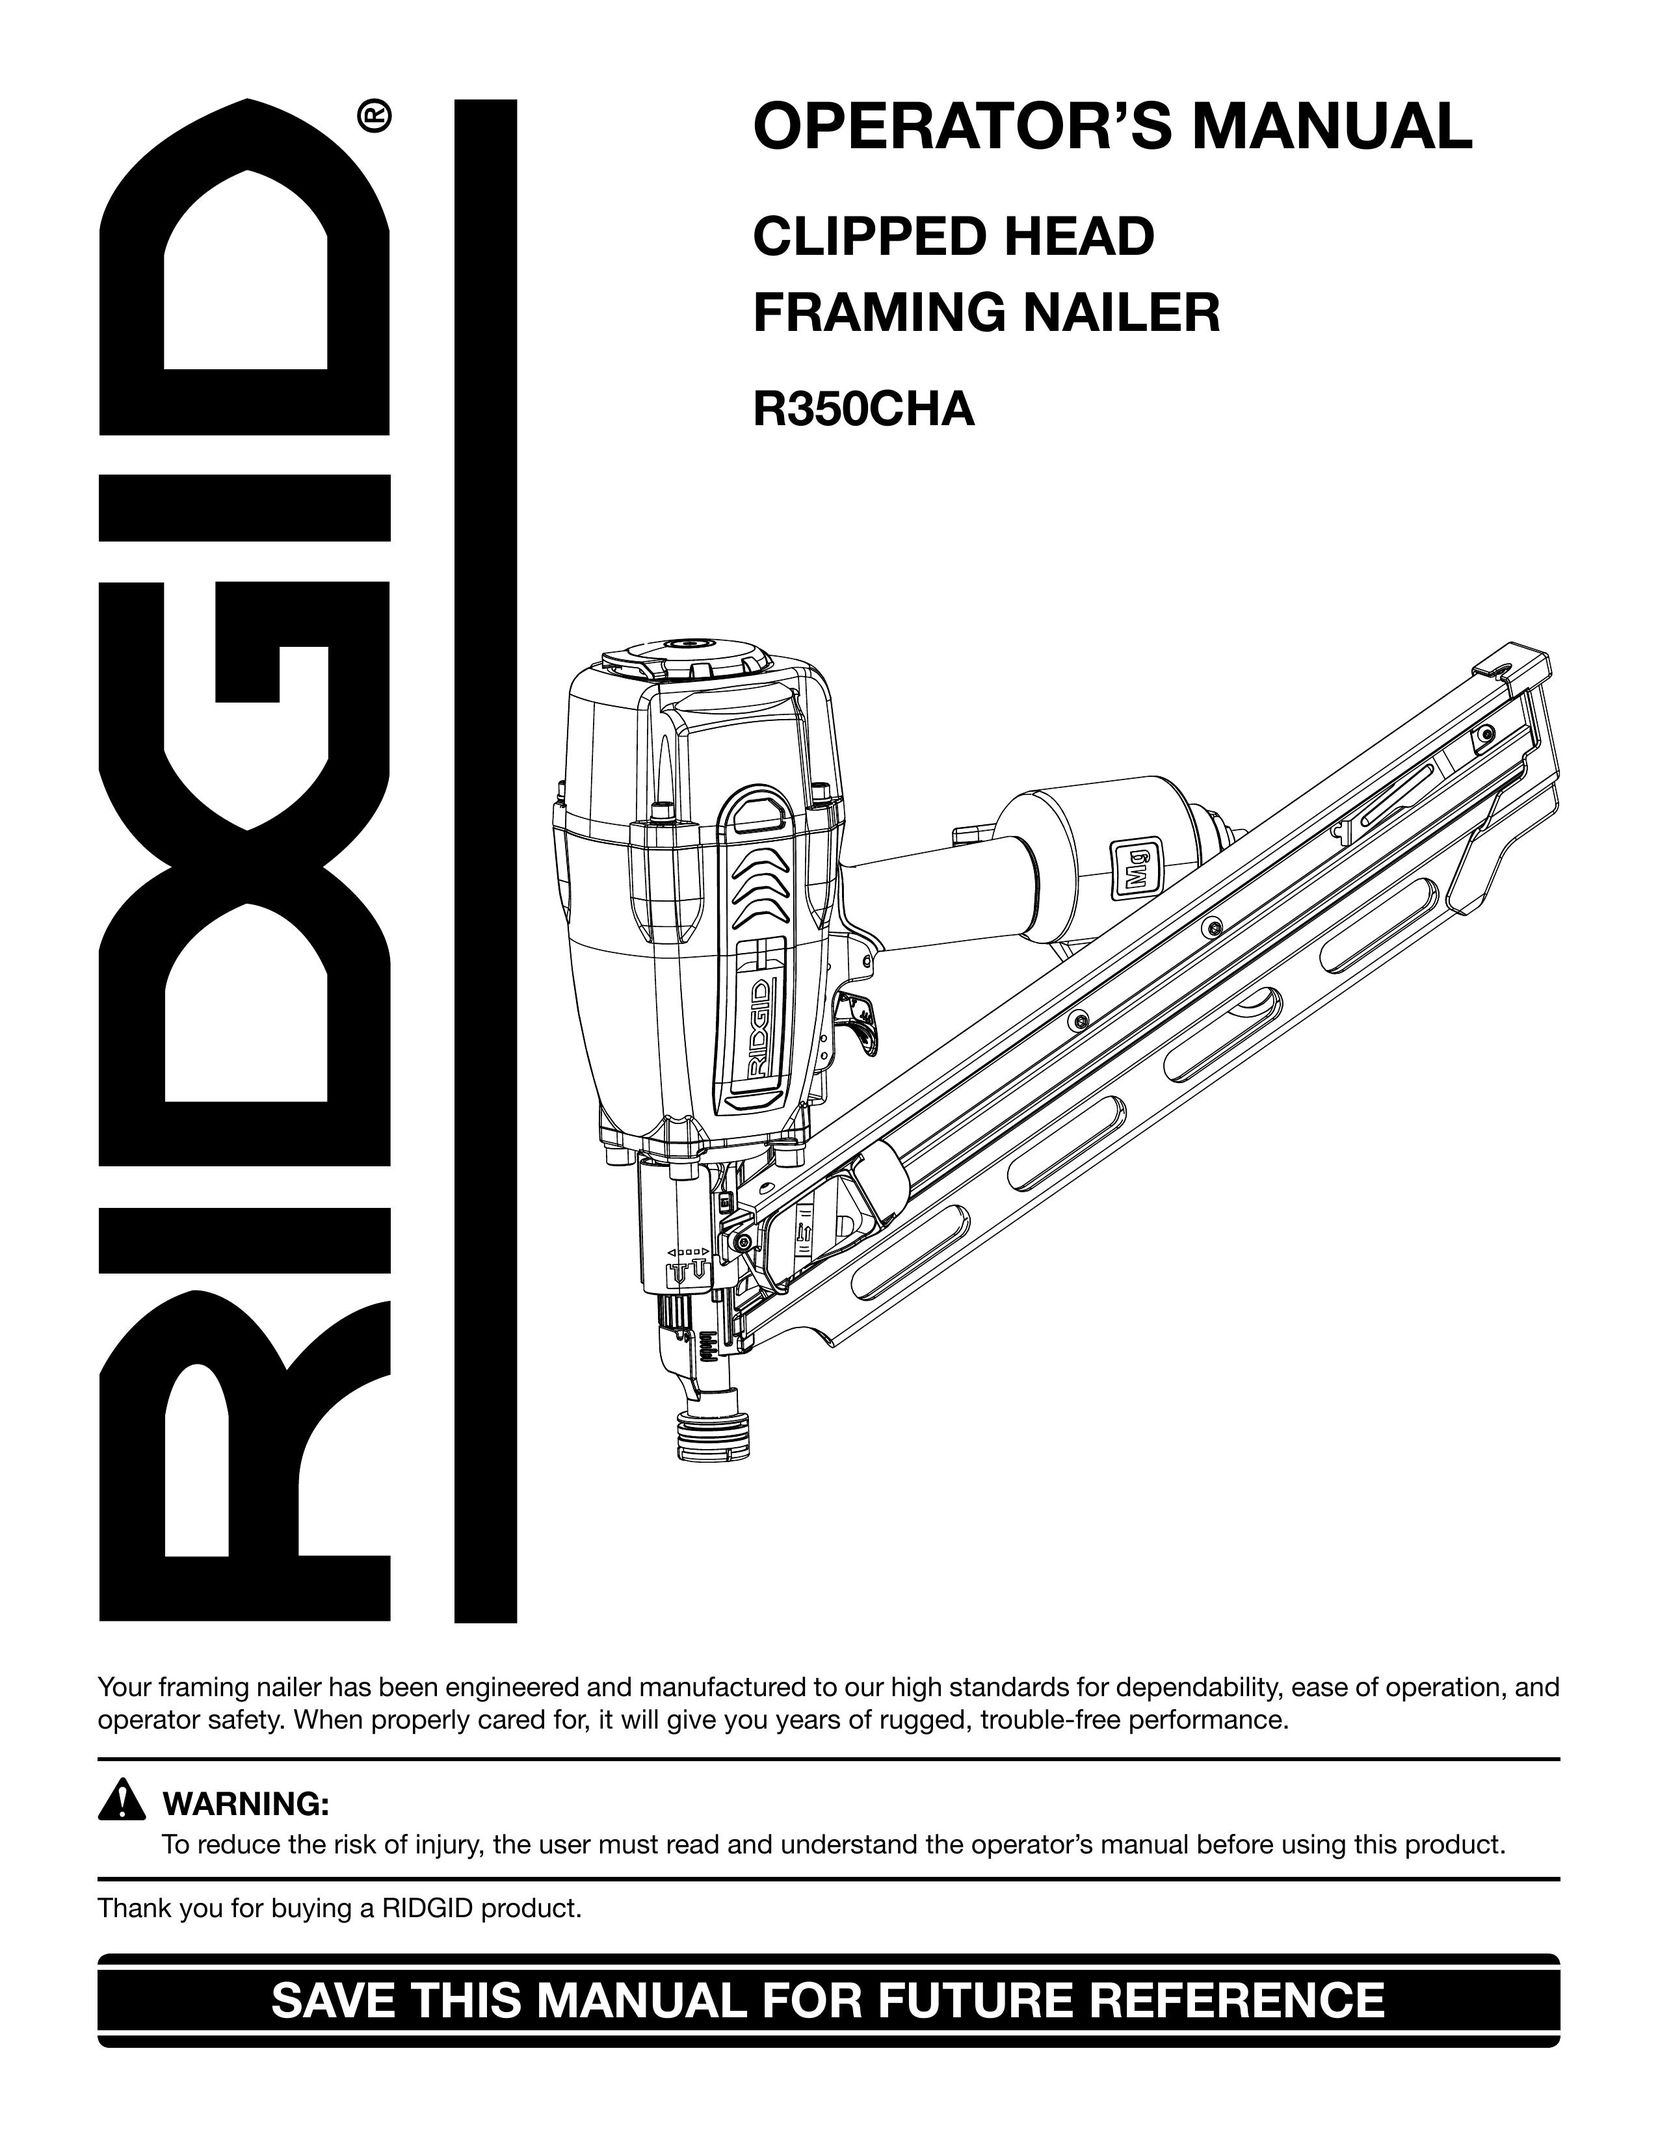 RIDGID R350CHA Nail Gun User Manual